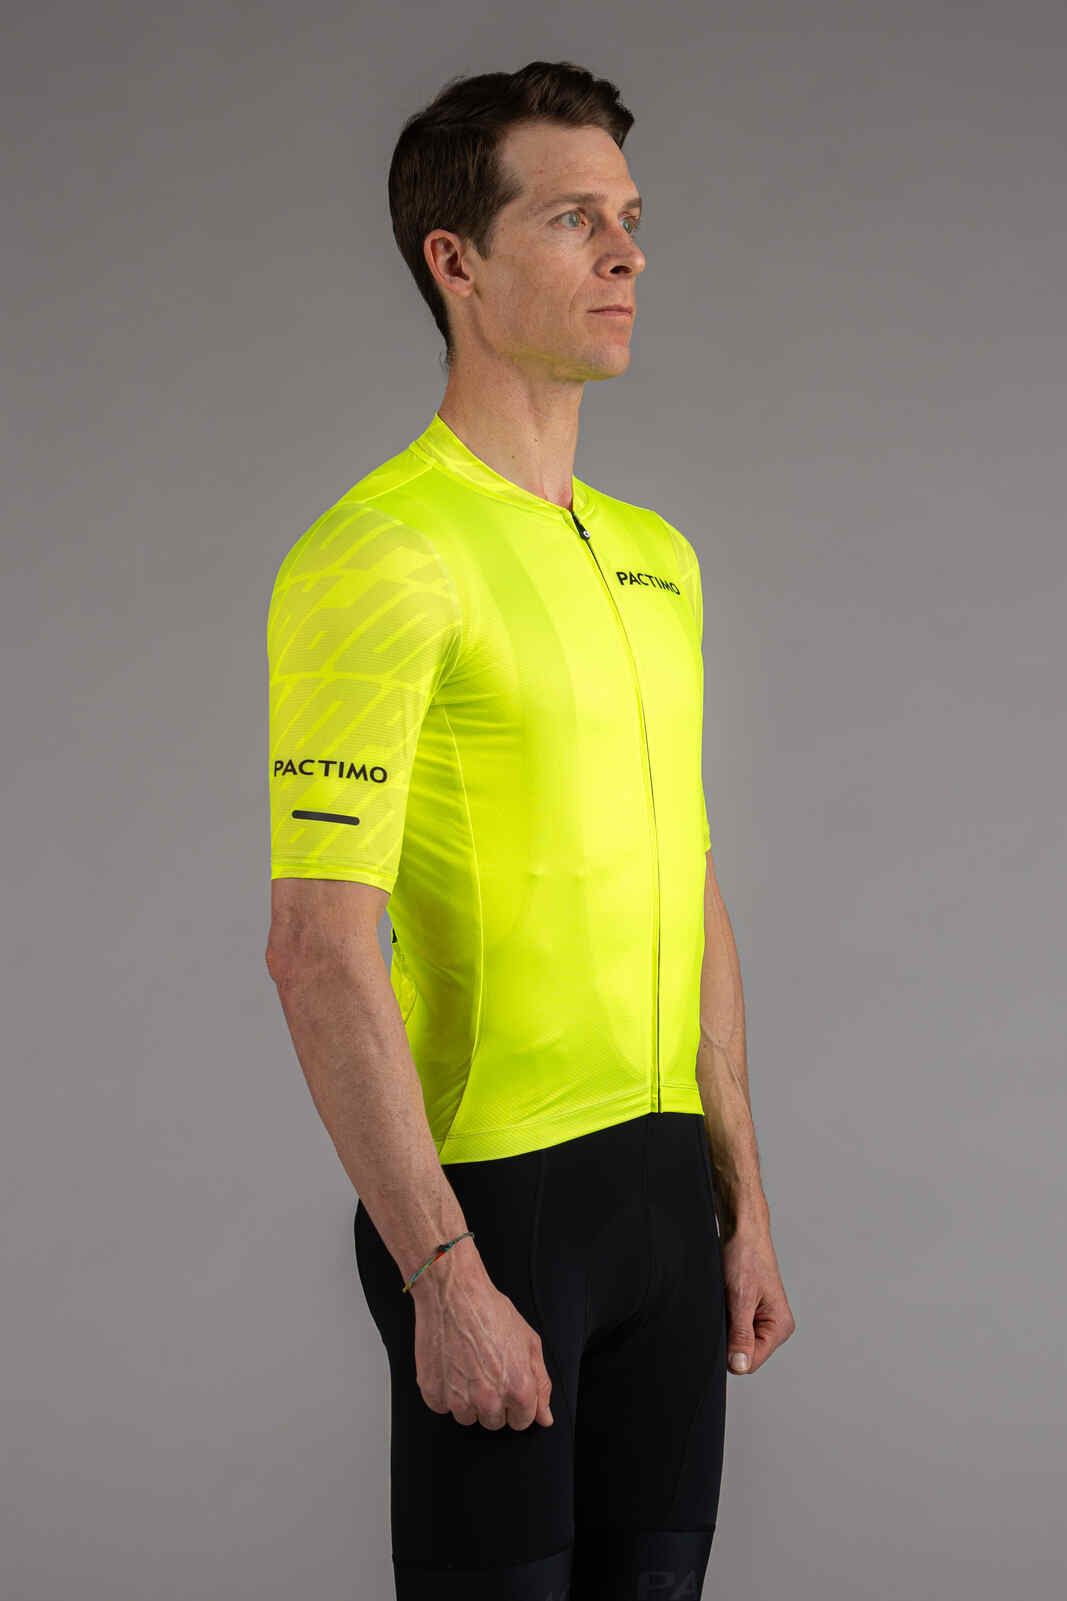 Men's High-Viz Yellow Ascent Aero Cycling Jersey - Front View